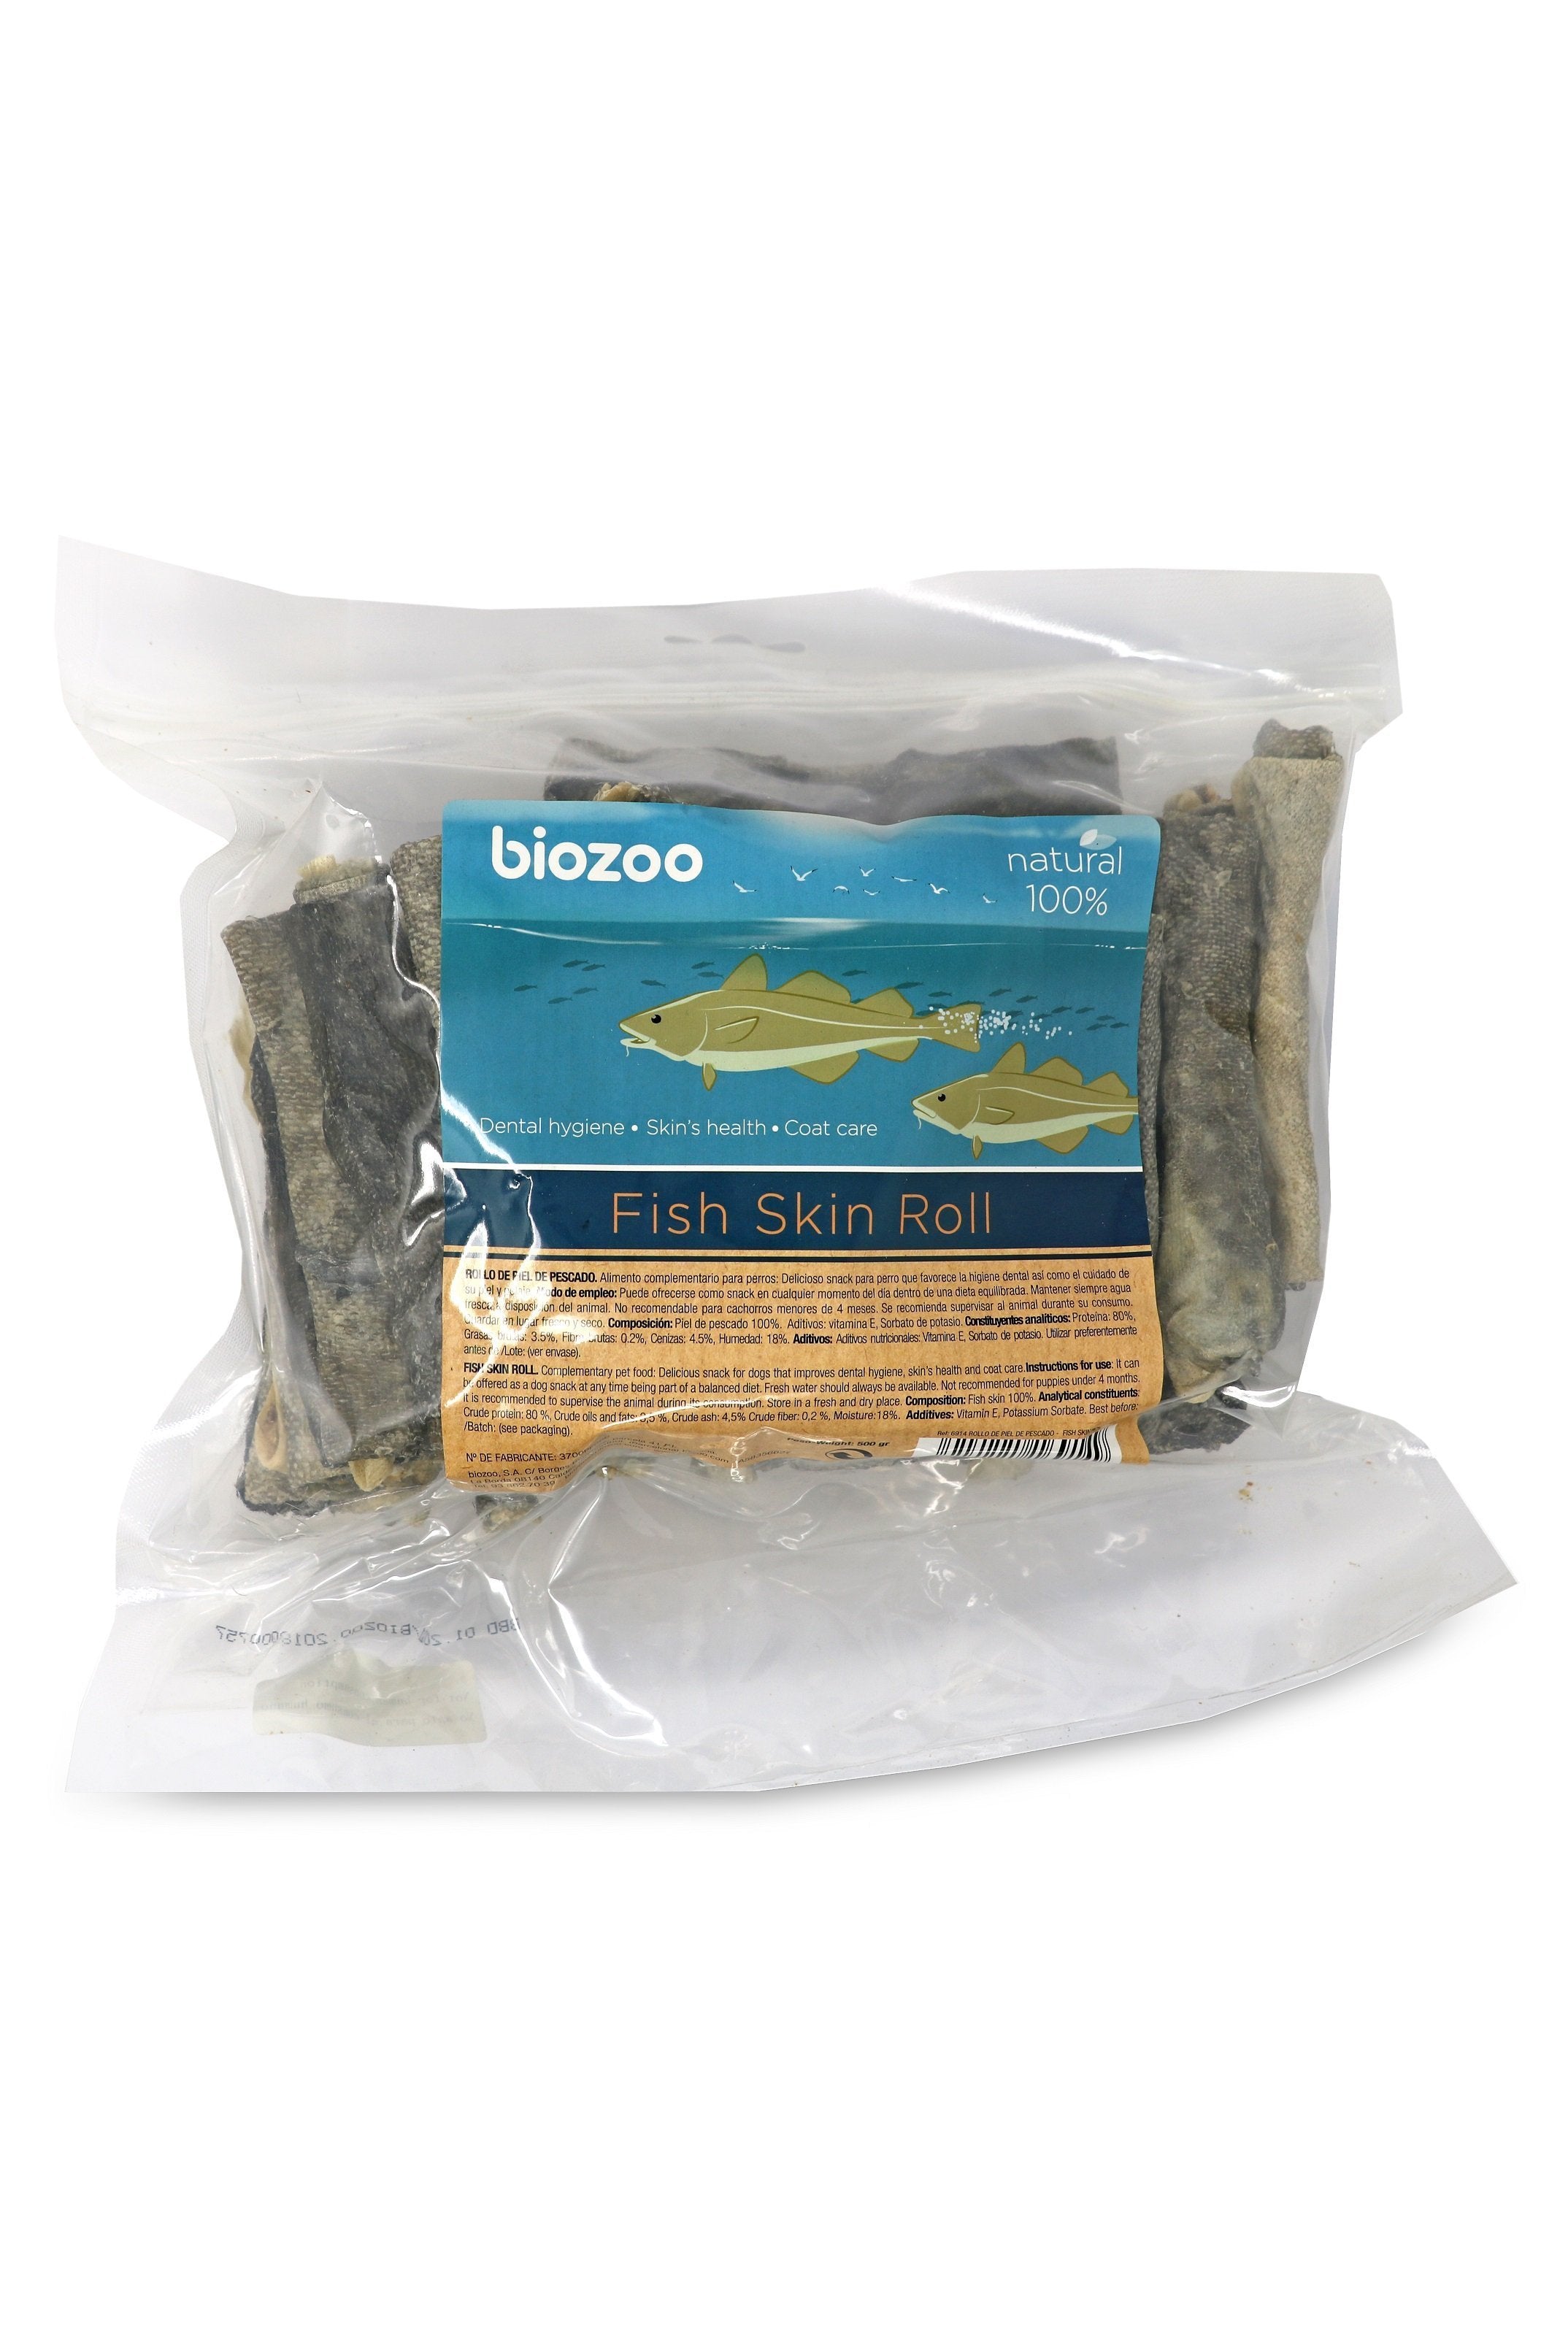 Fish skin roll-Snacks-Biozoo-500-Biozoopets